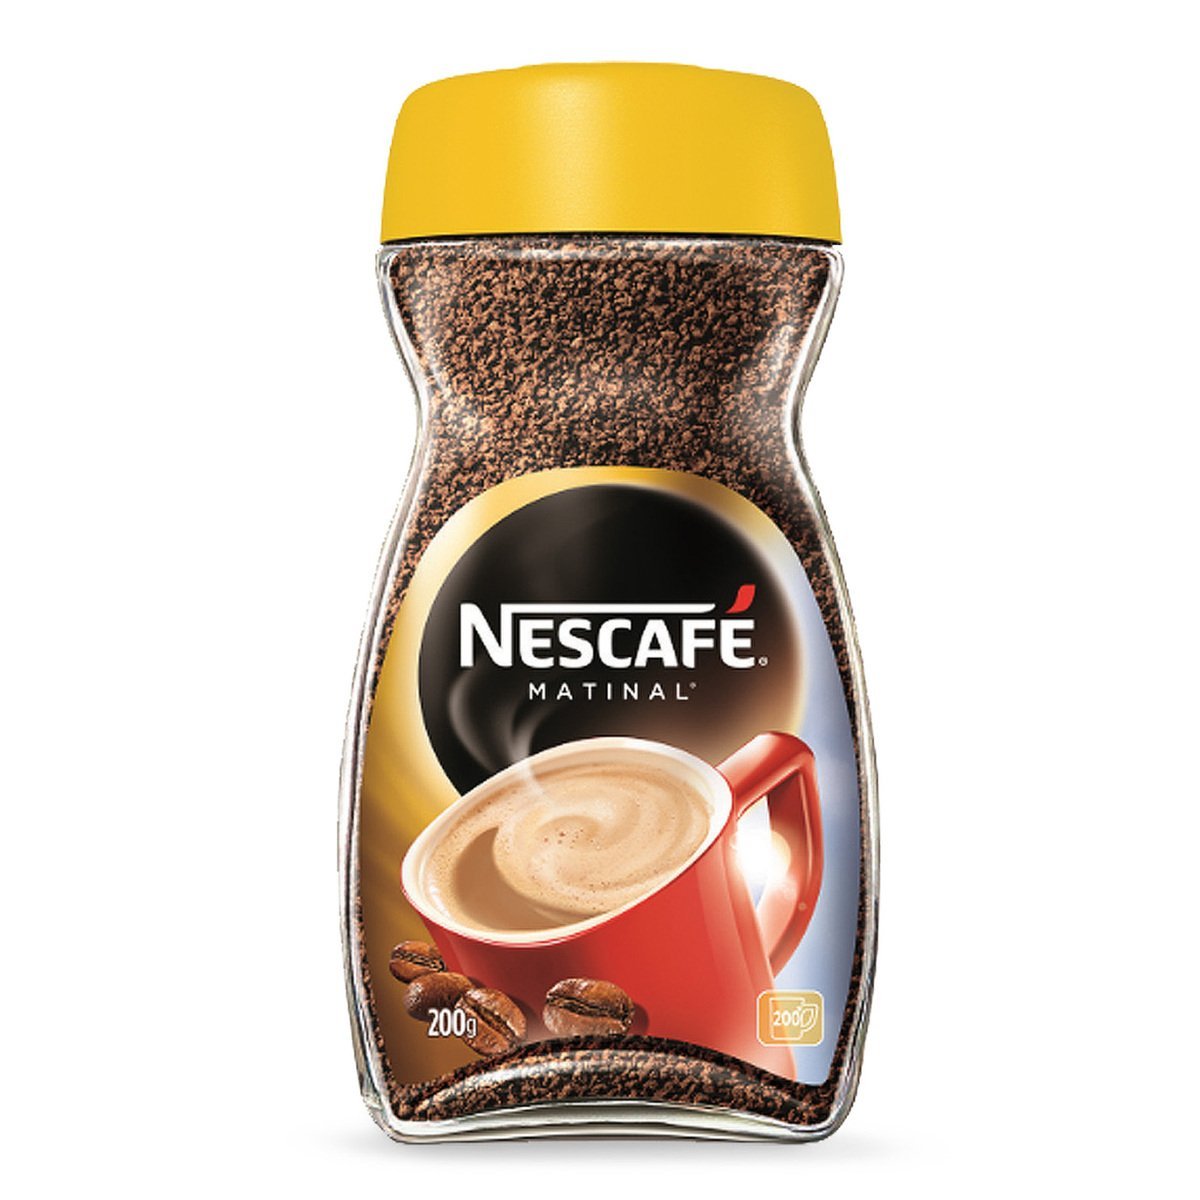 Nescafe Matinal Coffee 200g - Smooth & Balanced Coffee - Tulsidas